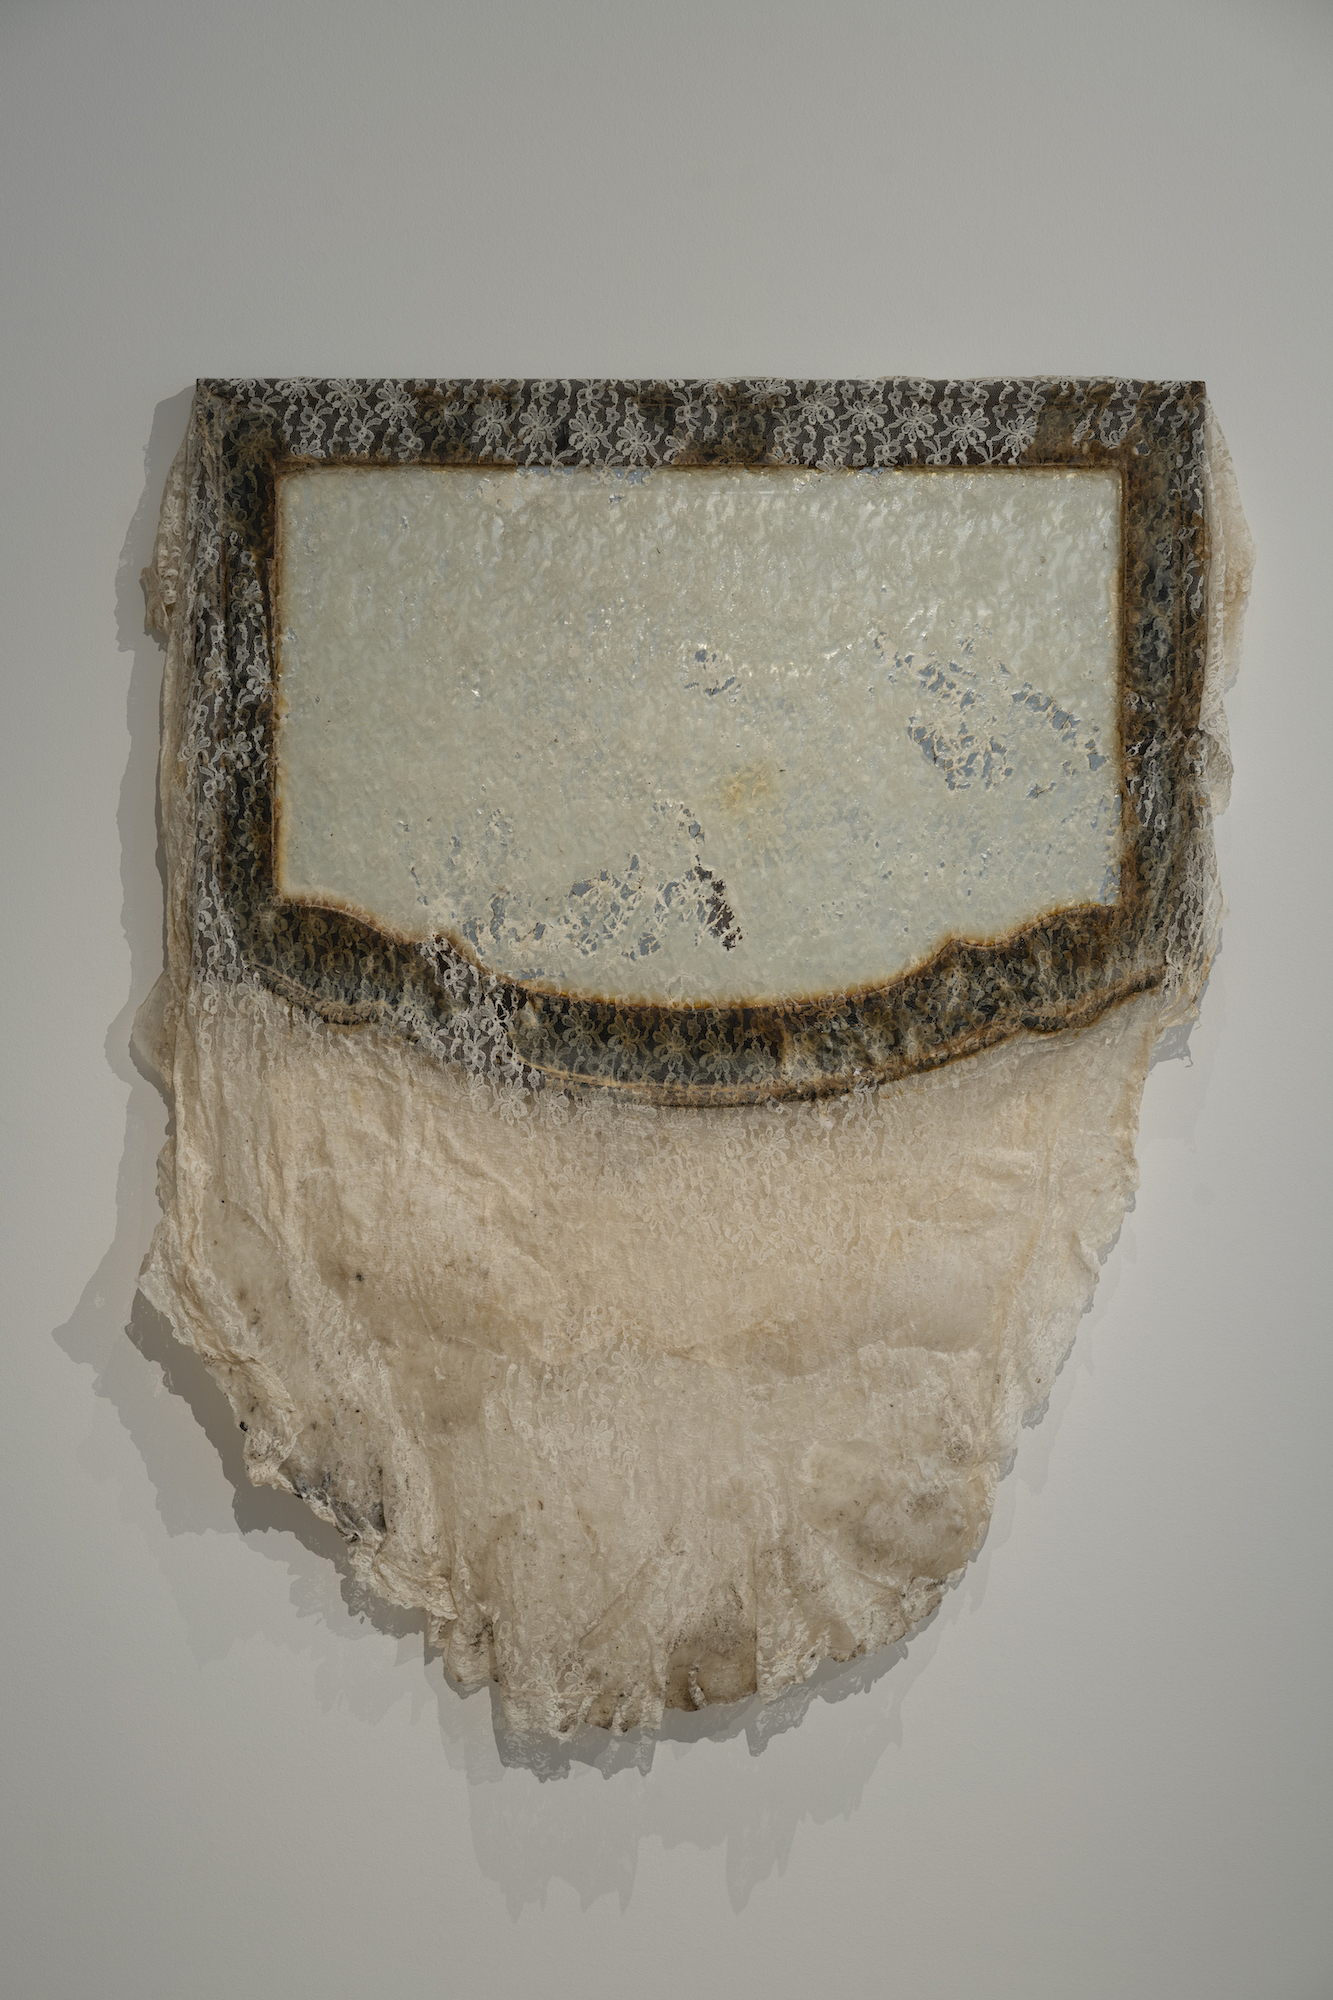 Bri Williams, Rejection, 2021, Lace table cloth, soap, mirror, 85 x 100 x 6 cm,  Courtesy of the artist